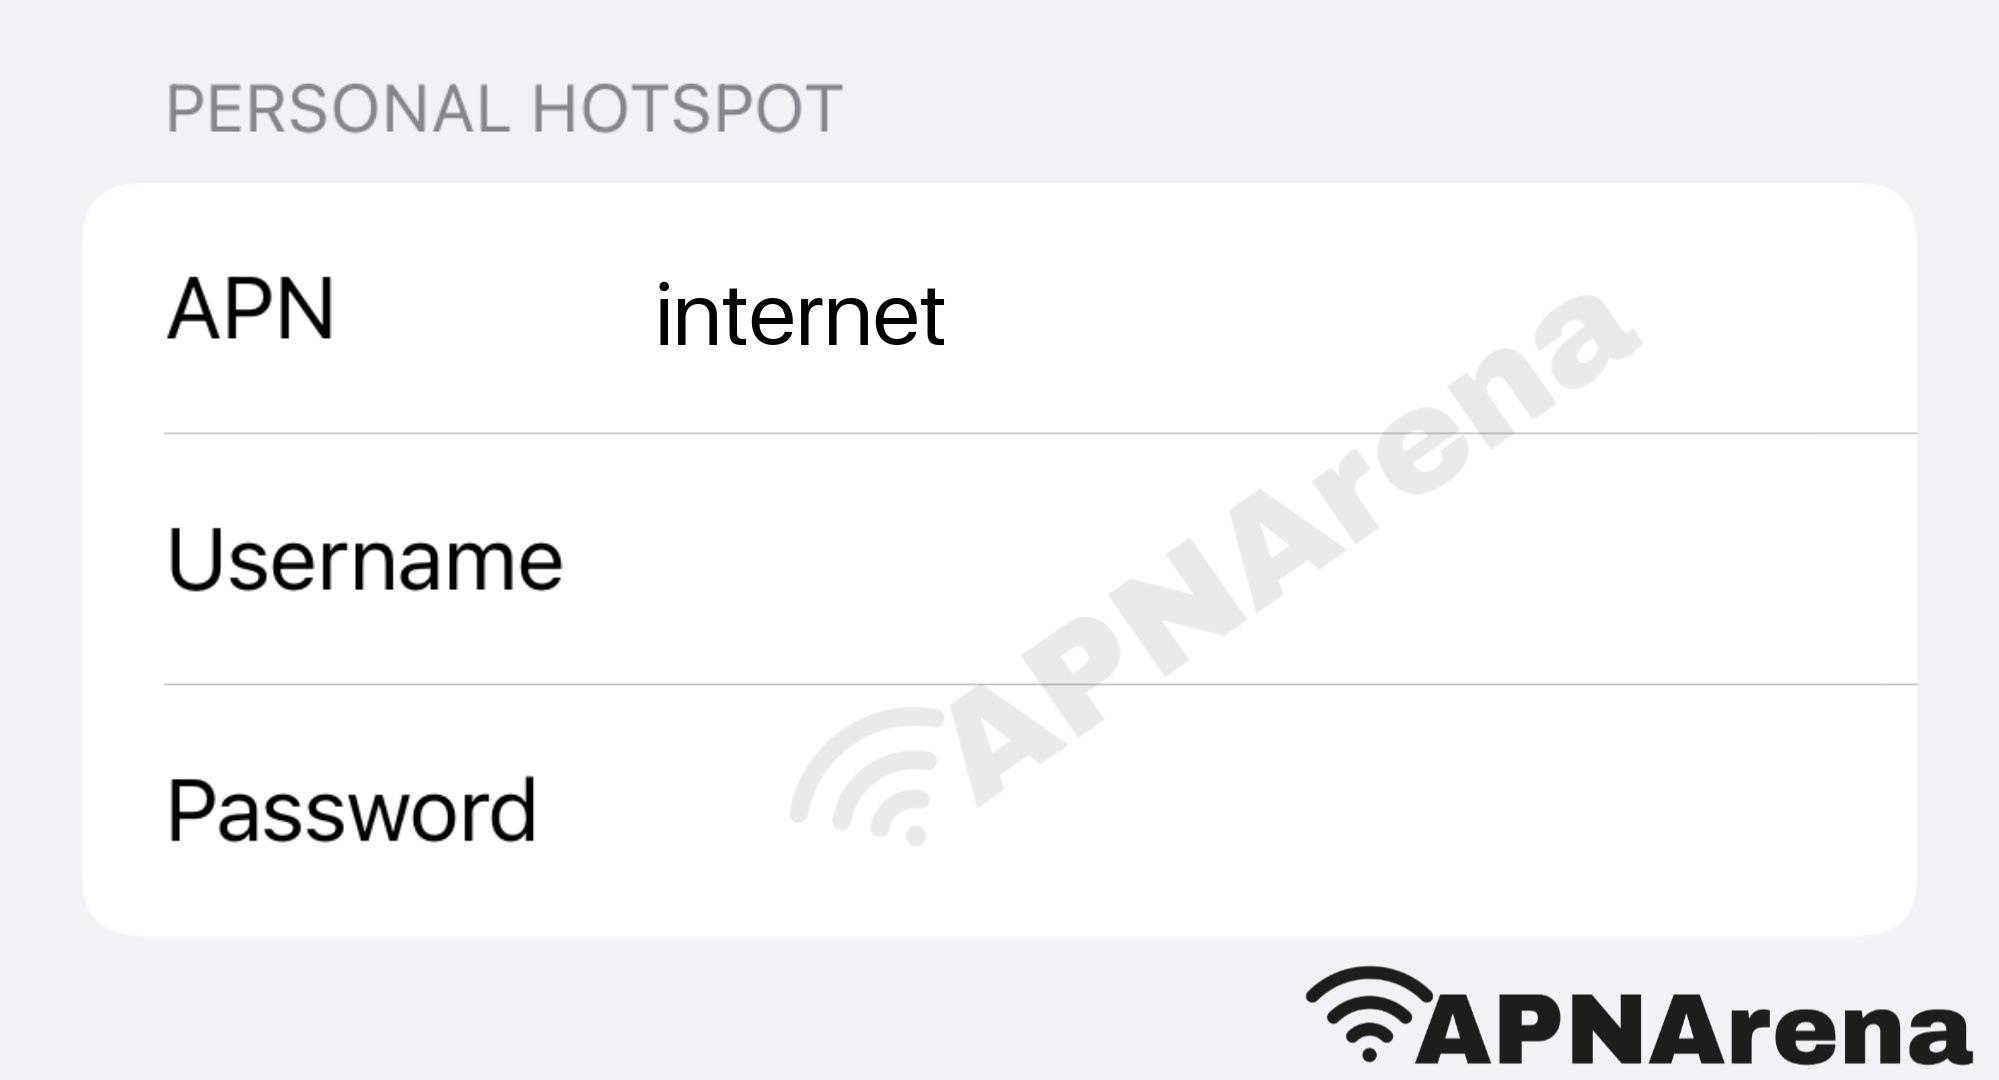 Telmob (Onatel) Personal Hotspot Settings for iPhone